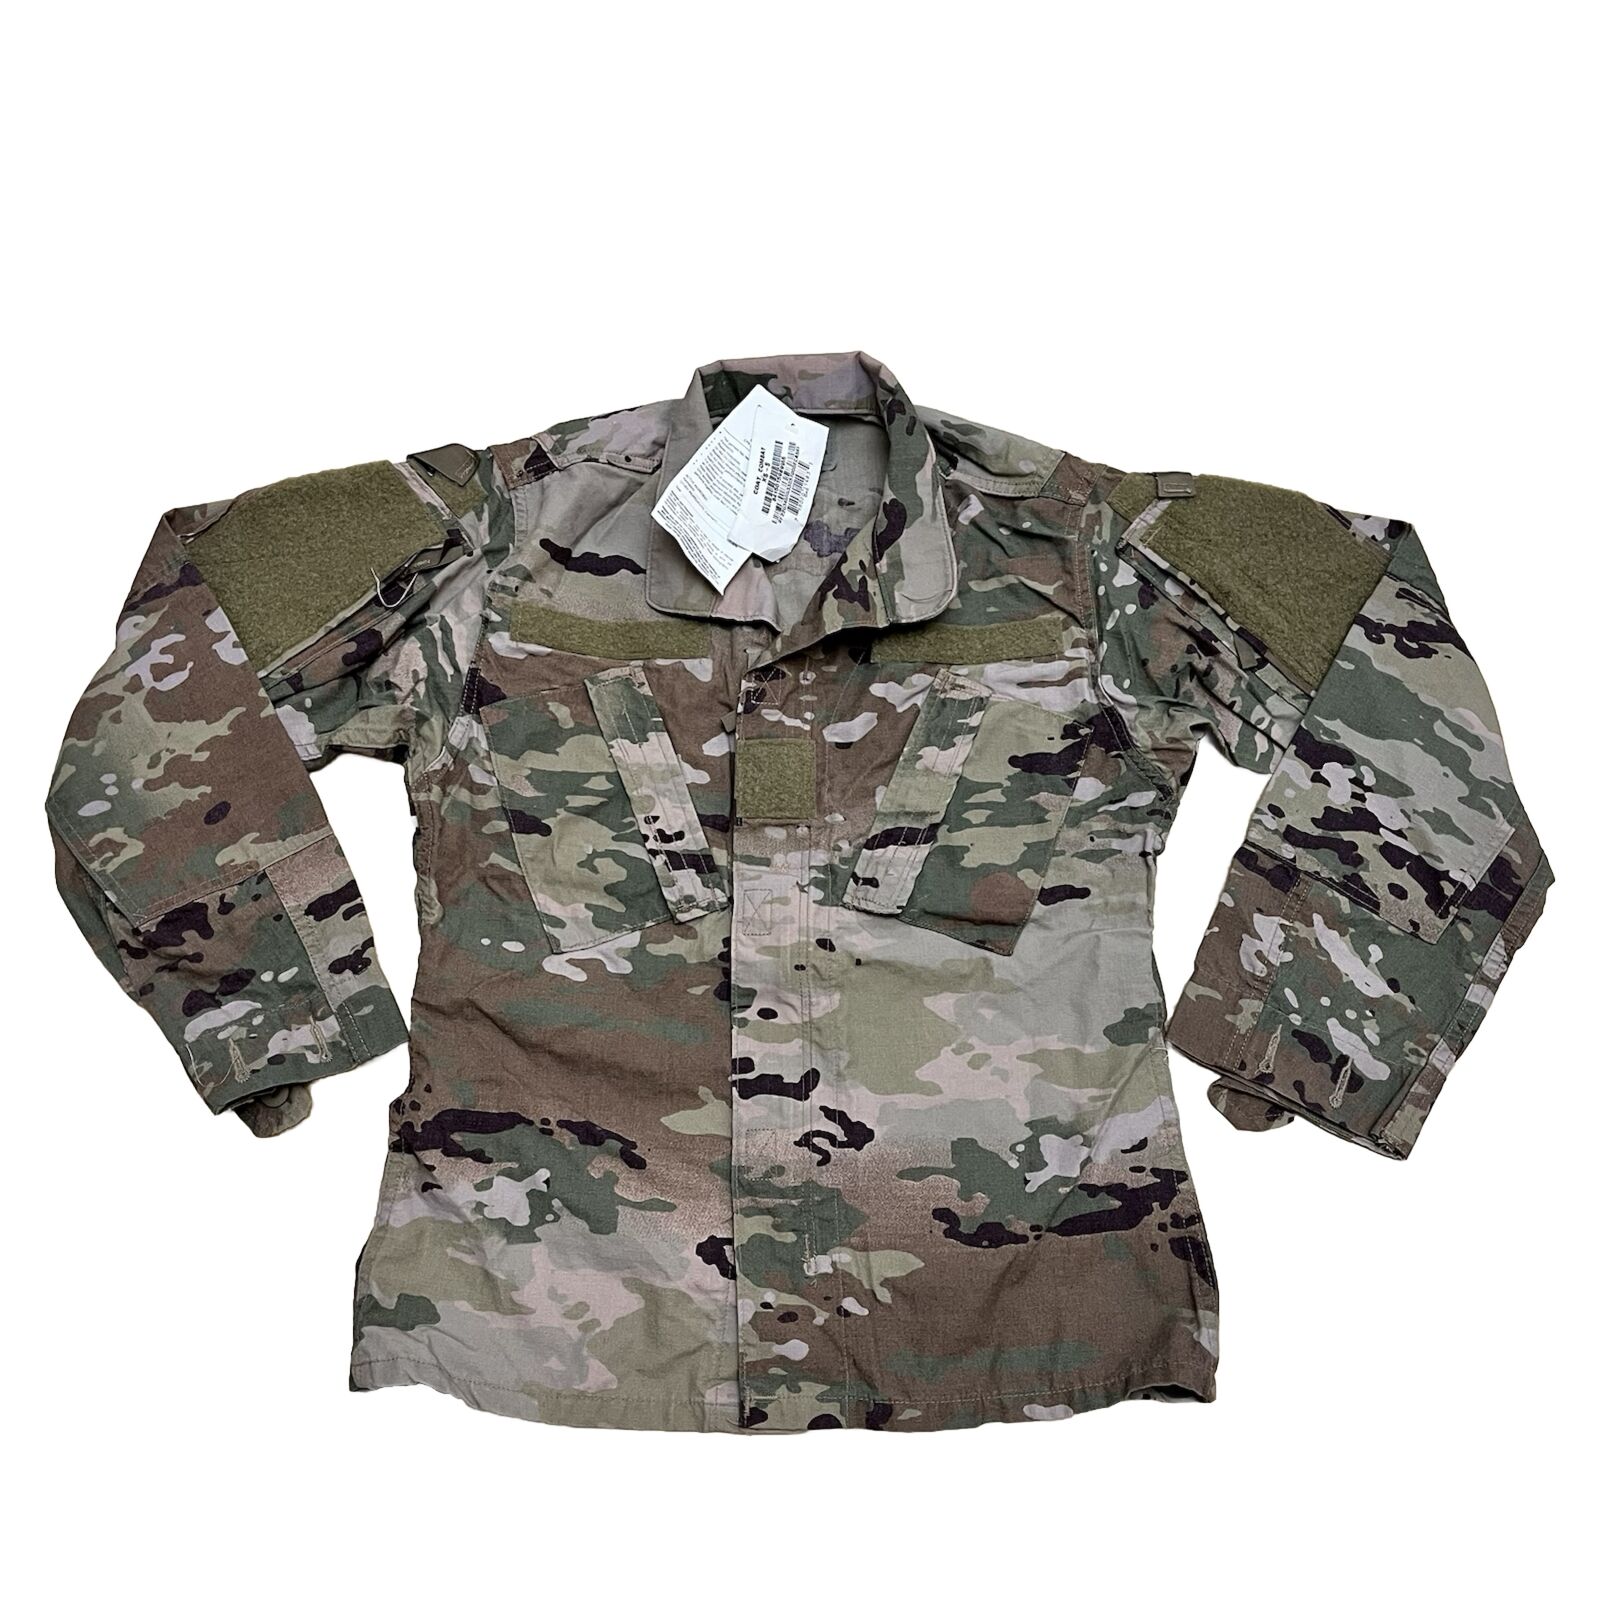 X-Small Short Shirt/Coat Army FRACU 8415-01-598-9966 OCP Multicam New